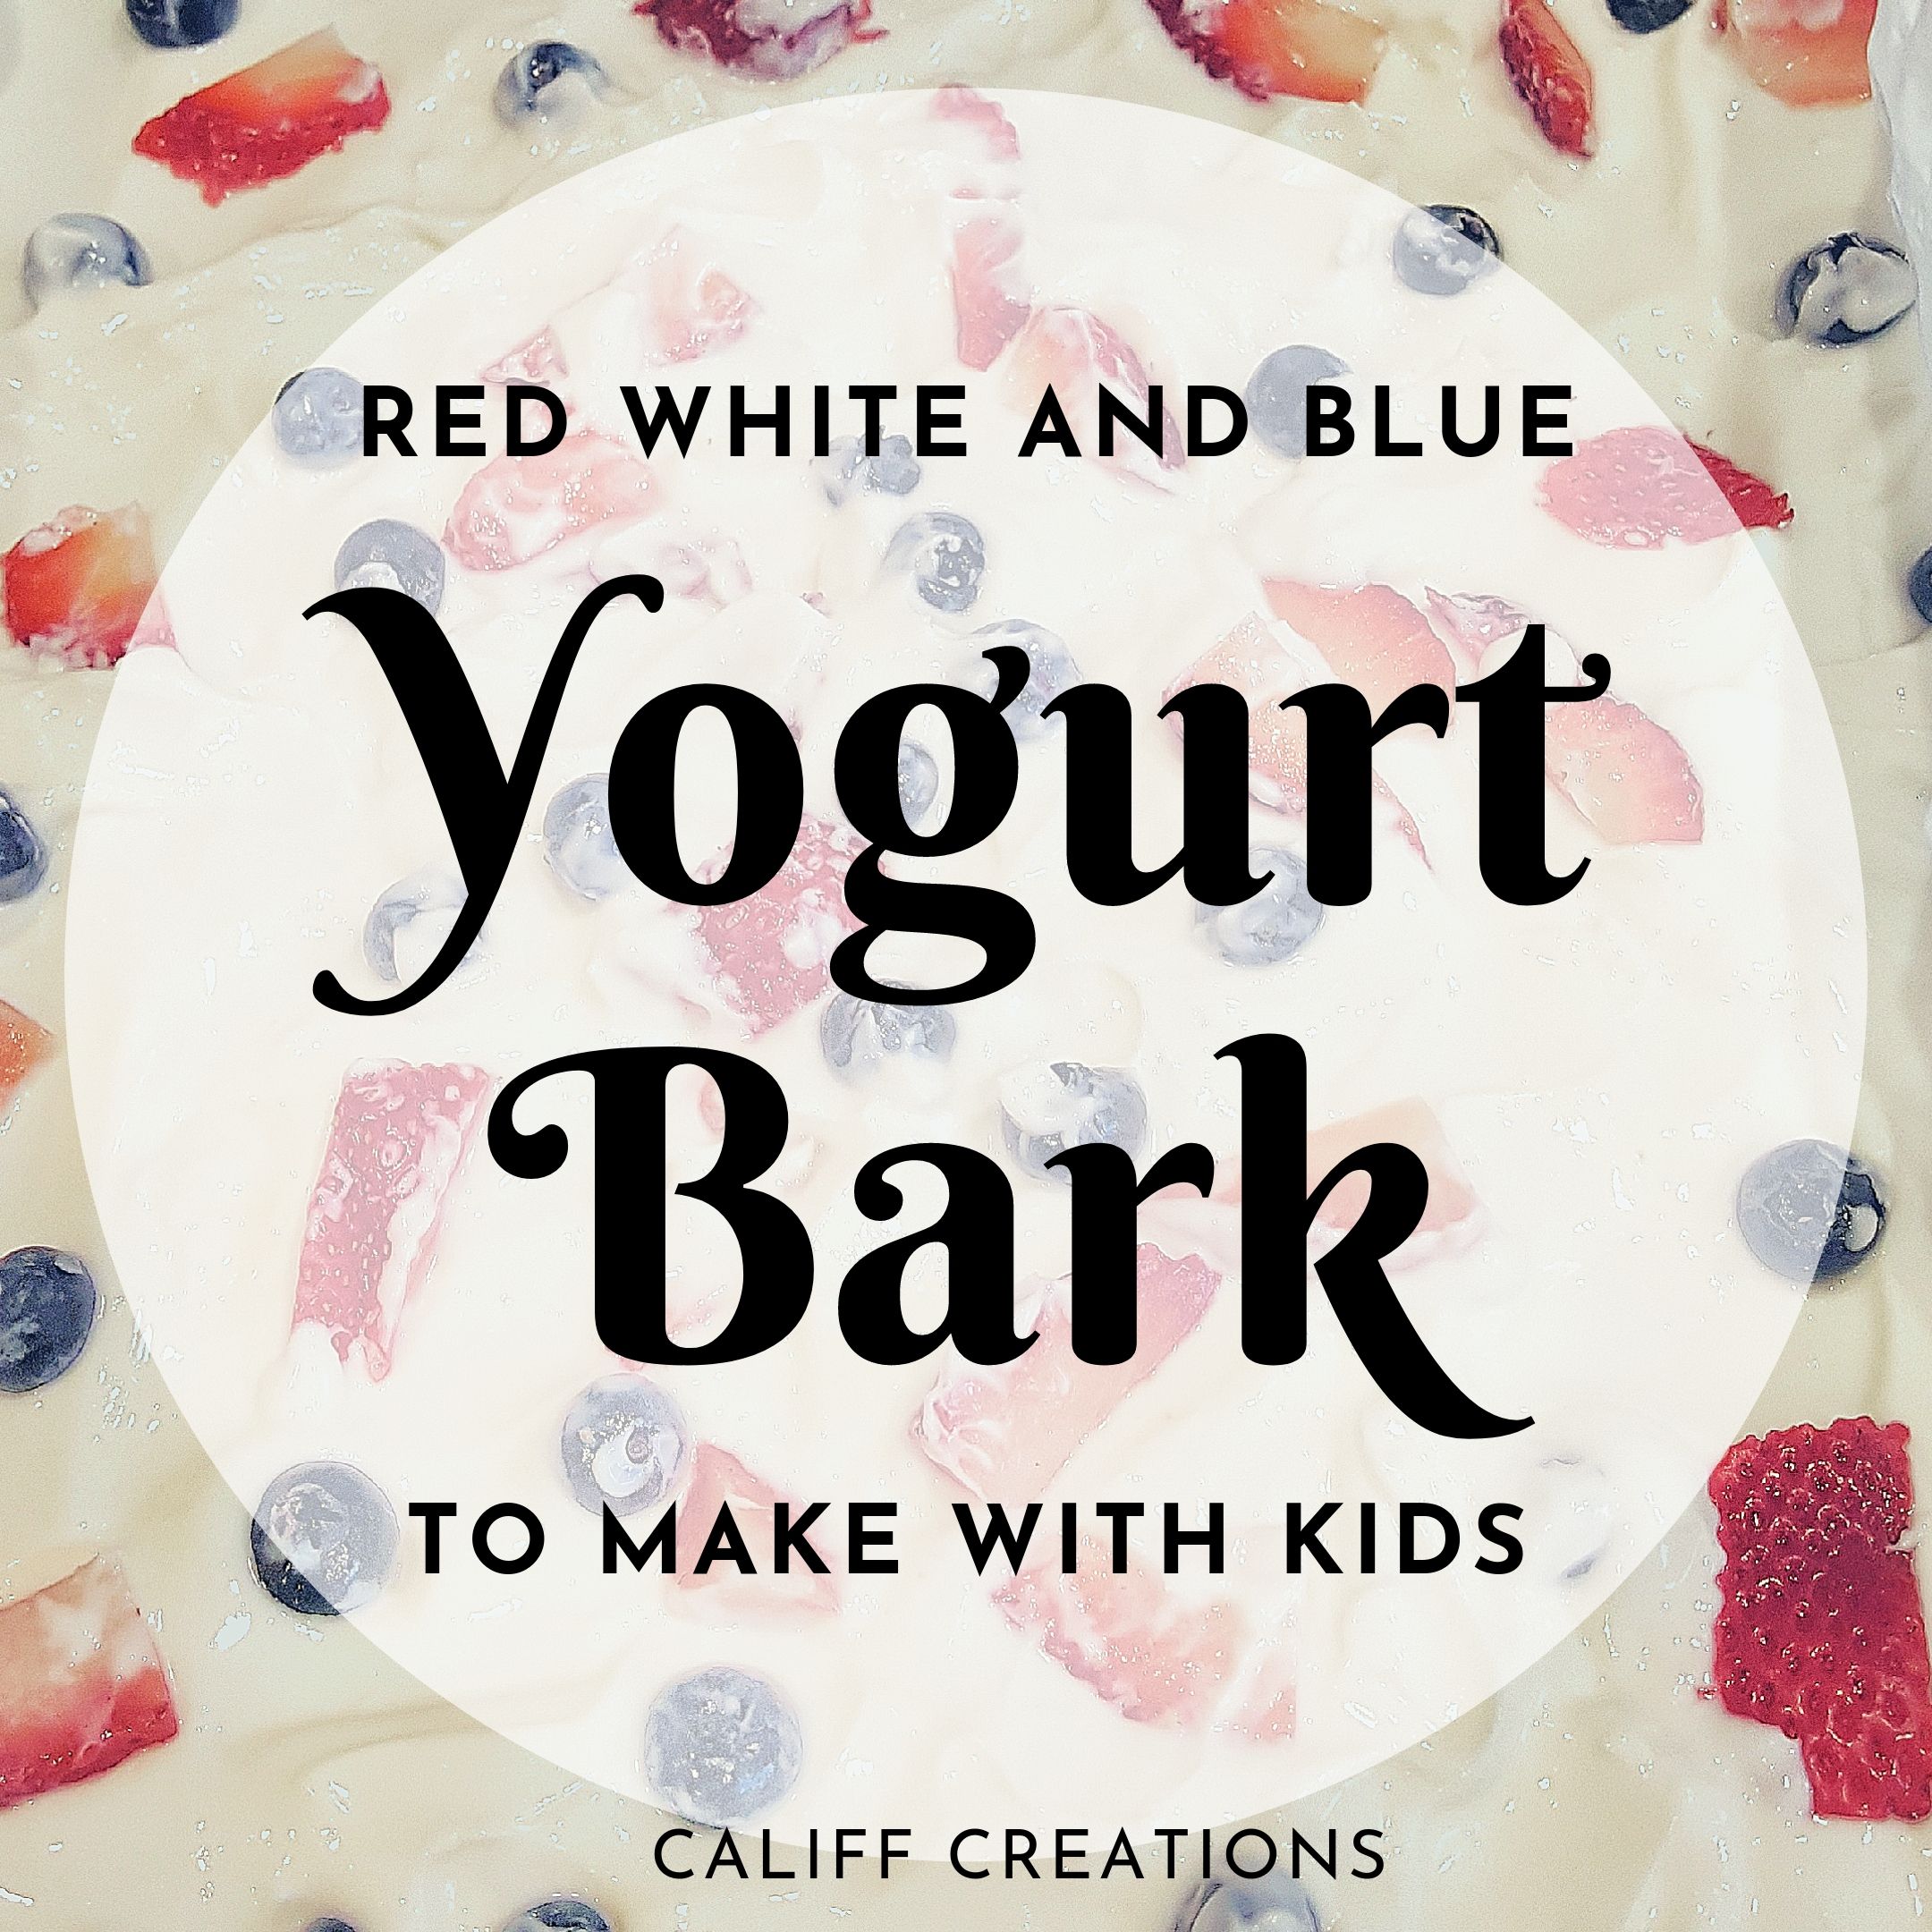 Red White and Blue Yogurt Bark To Make with Kids